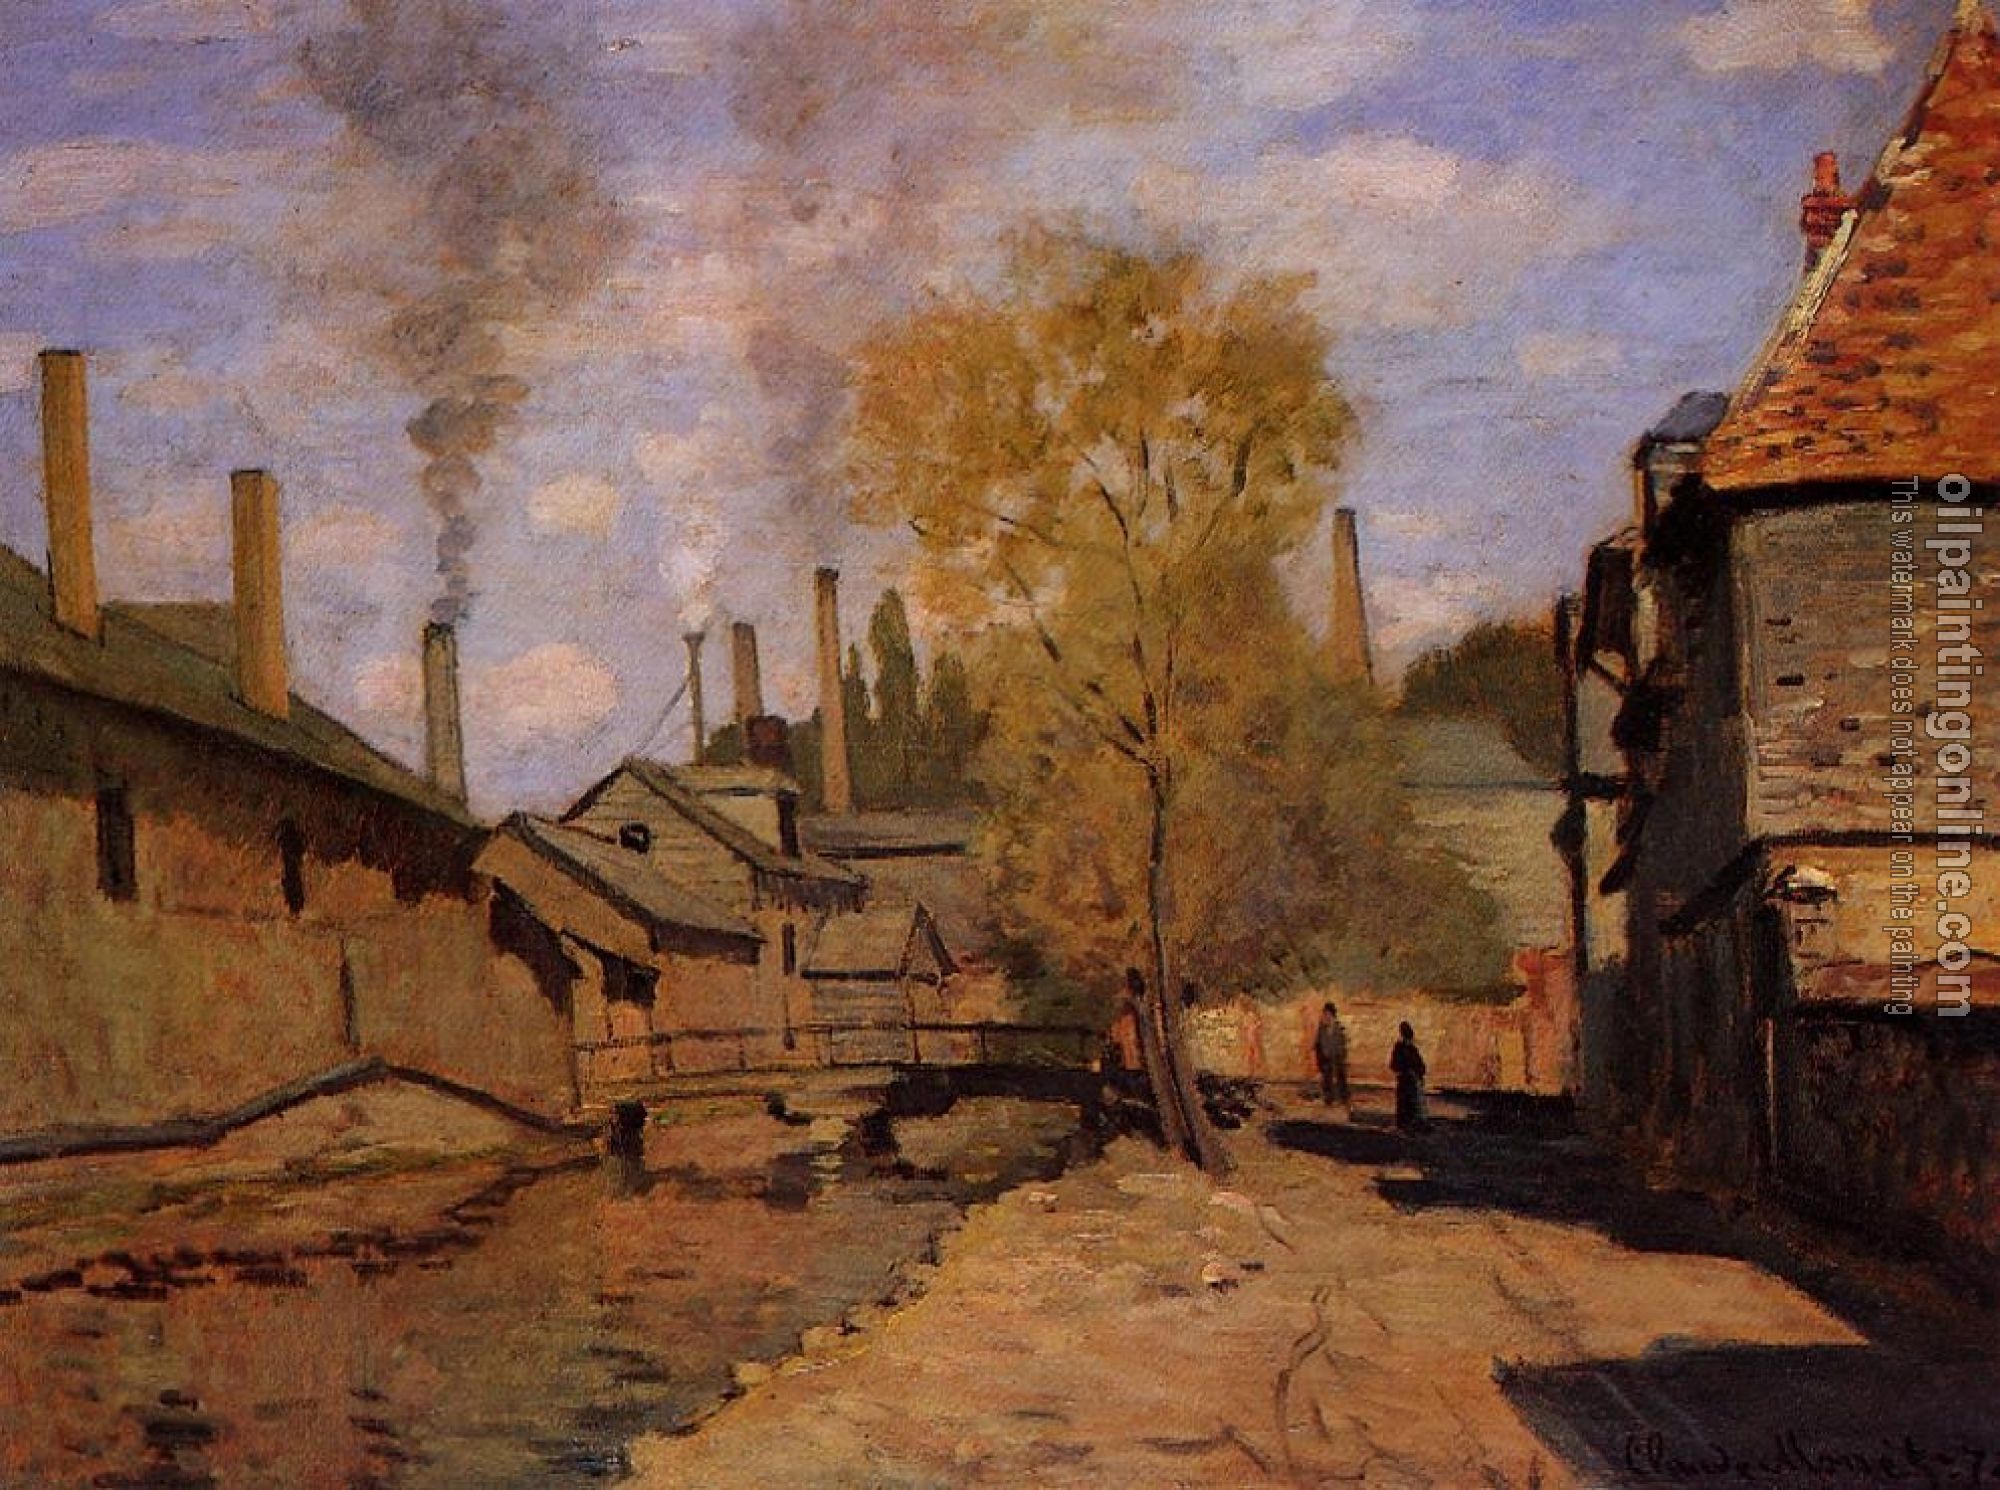 Monet, Claude Oscar - Factories at Deville, near Rouen